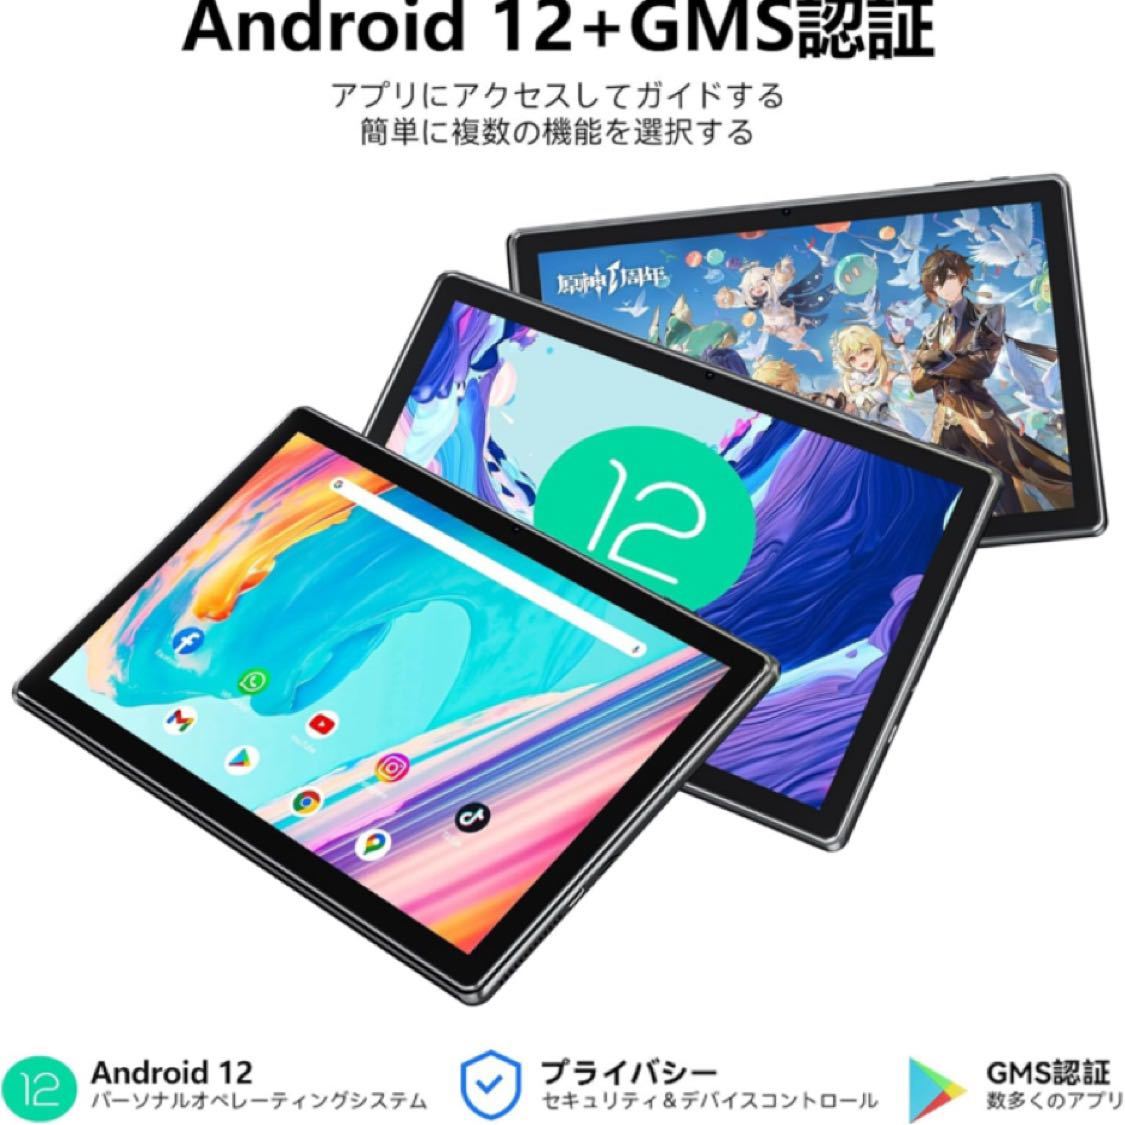 Android 12 tablet 10.1 -inch WiFi model ]SGIN tablet,8GB RAM+128GB ROM+256GB enhancing,8 core CPU